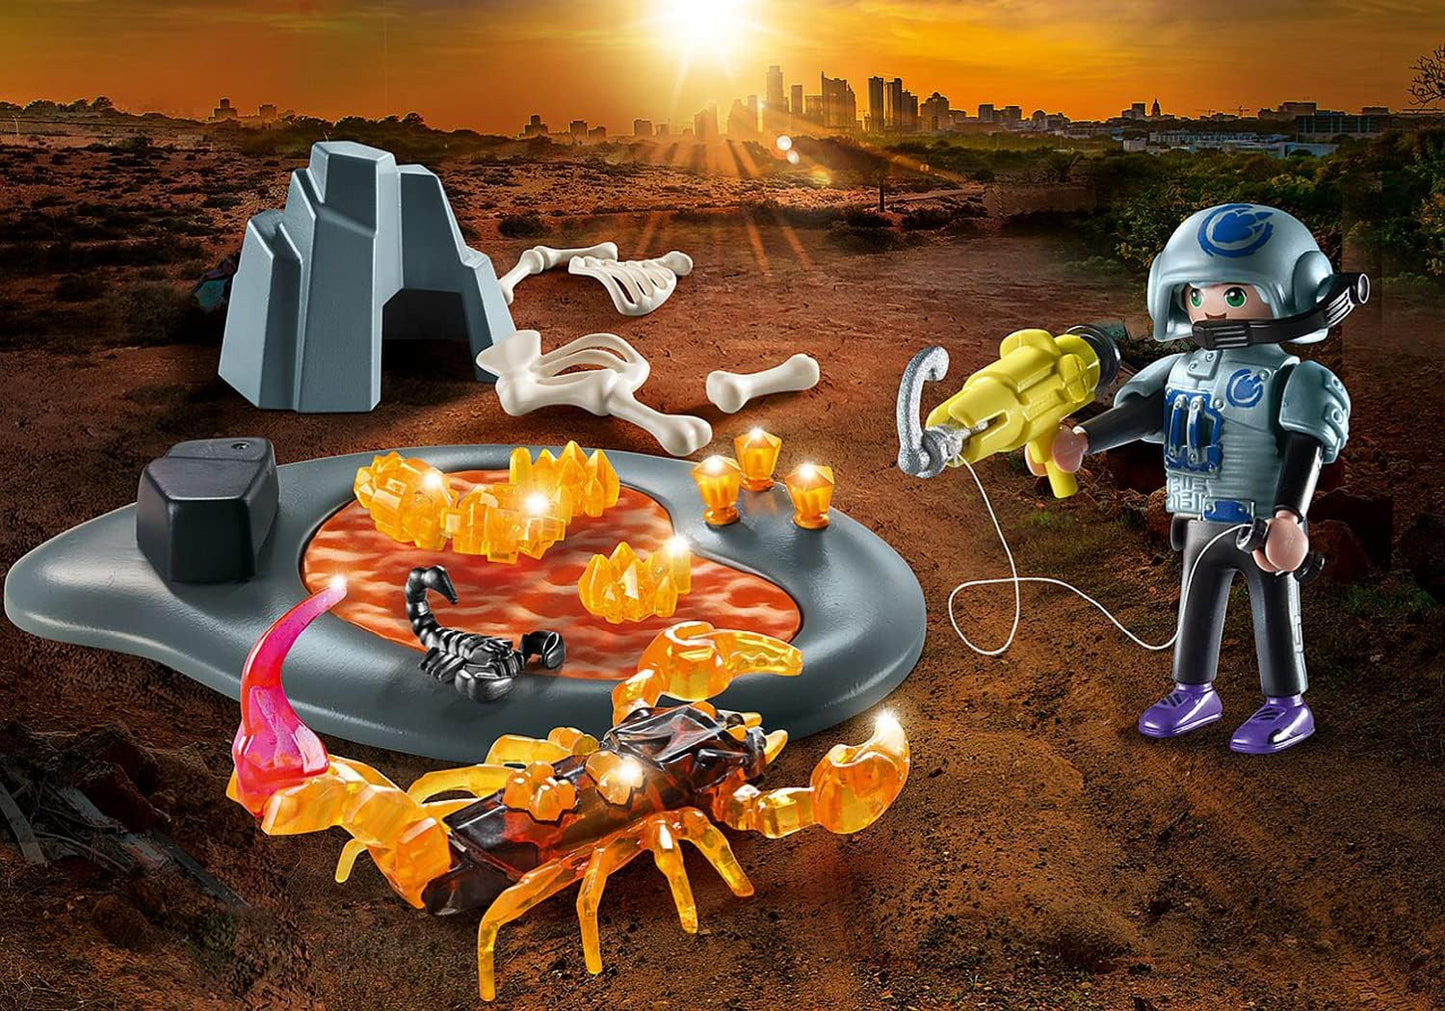 Playmobil - Starter Pack Dino Rise Fire Scorpion